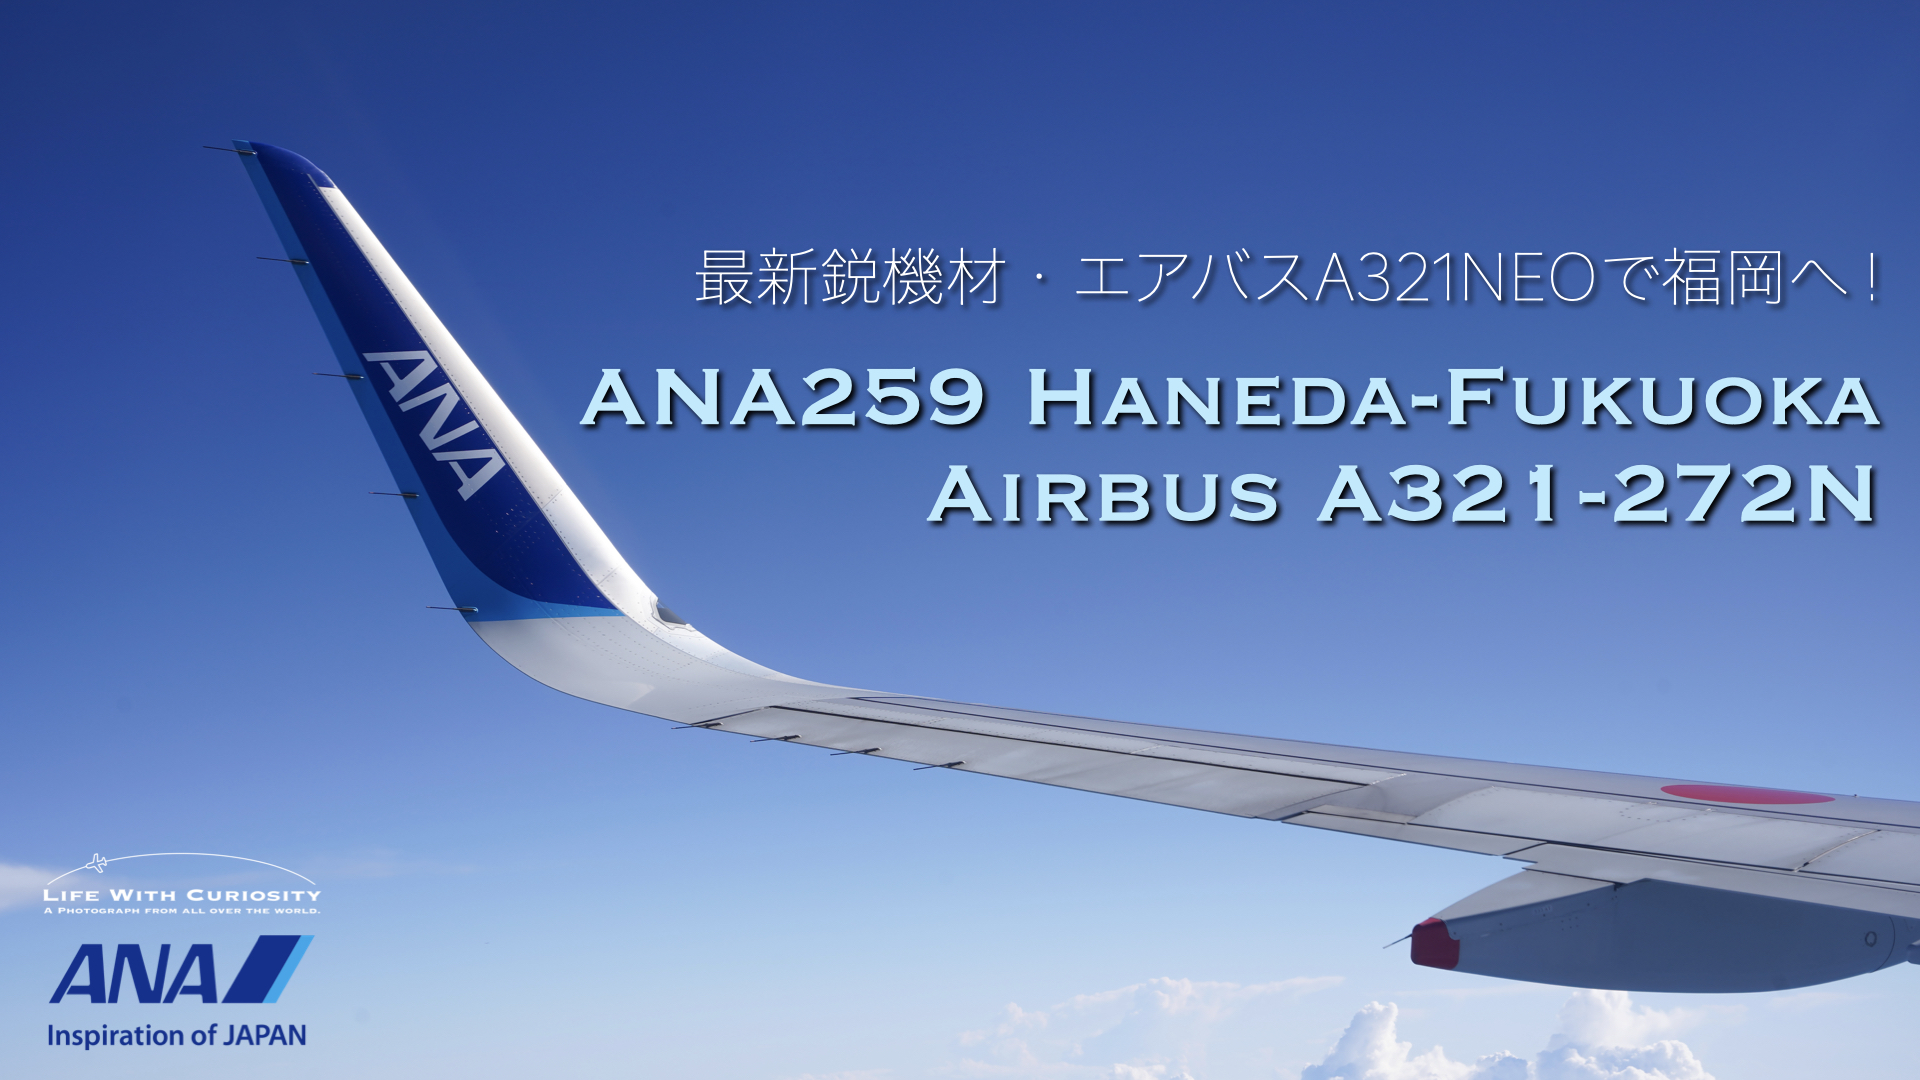 Ana最新鋭のエアバスa321neoで福岡へ Ana259便 Hnd Fuk Economy Class Life With Curiosity